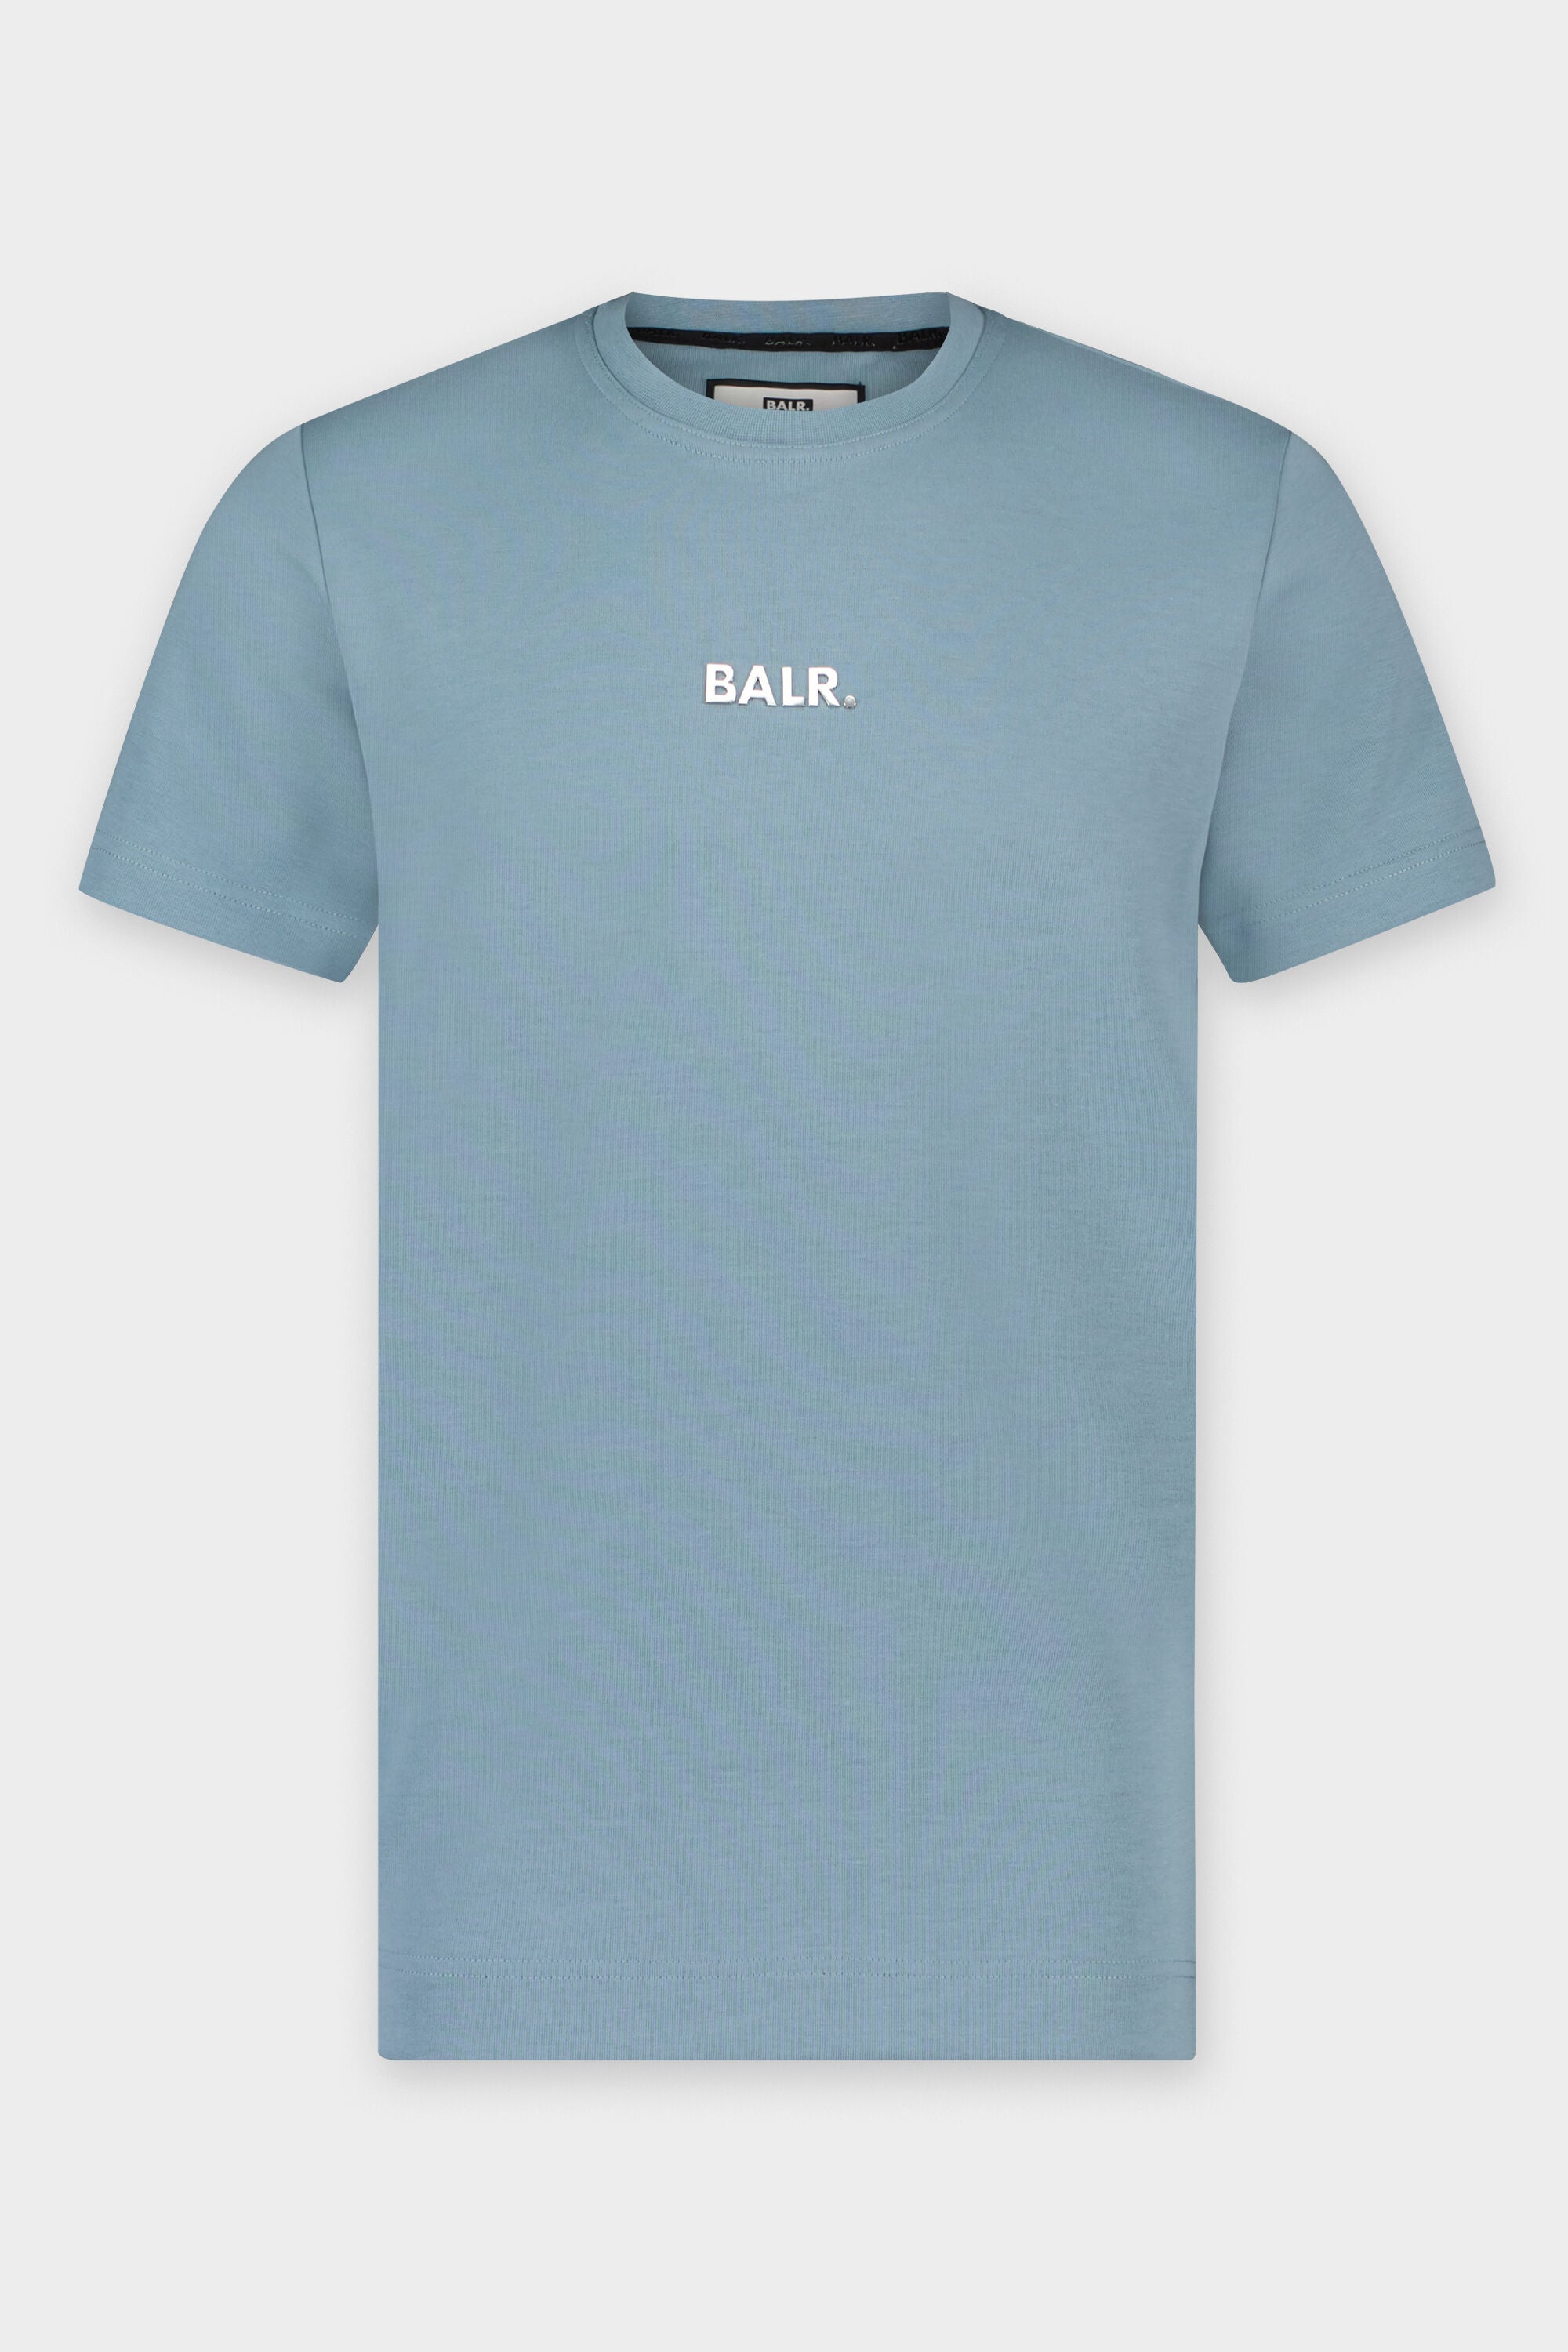 Q-Series Straight T-shirt Stone Blue – BALR.